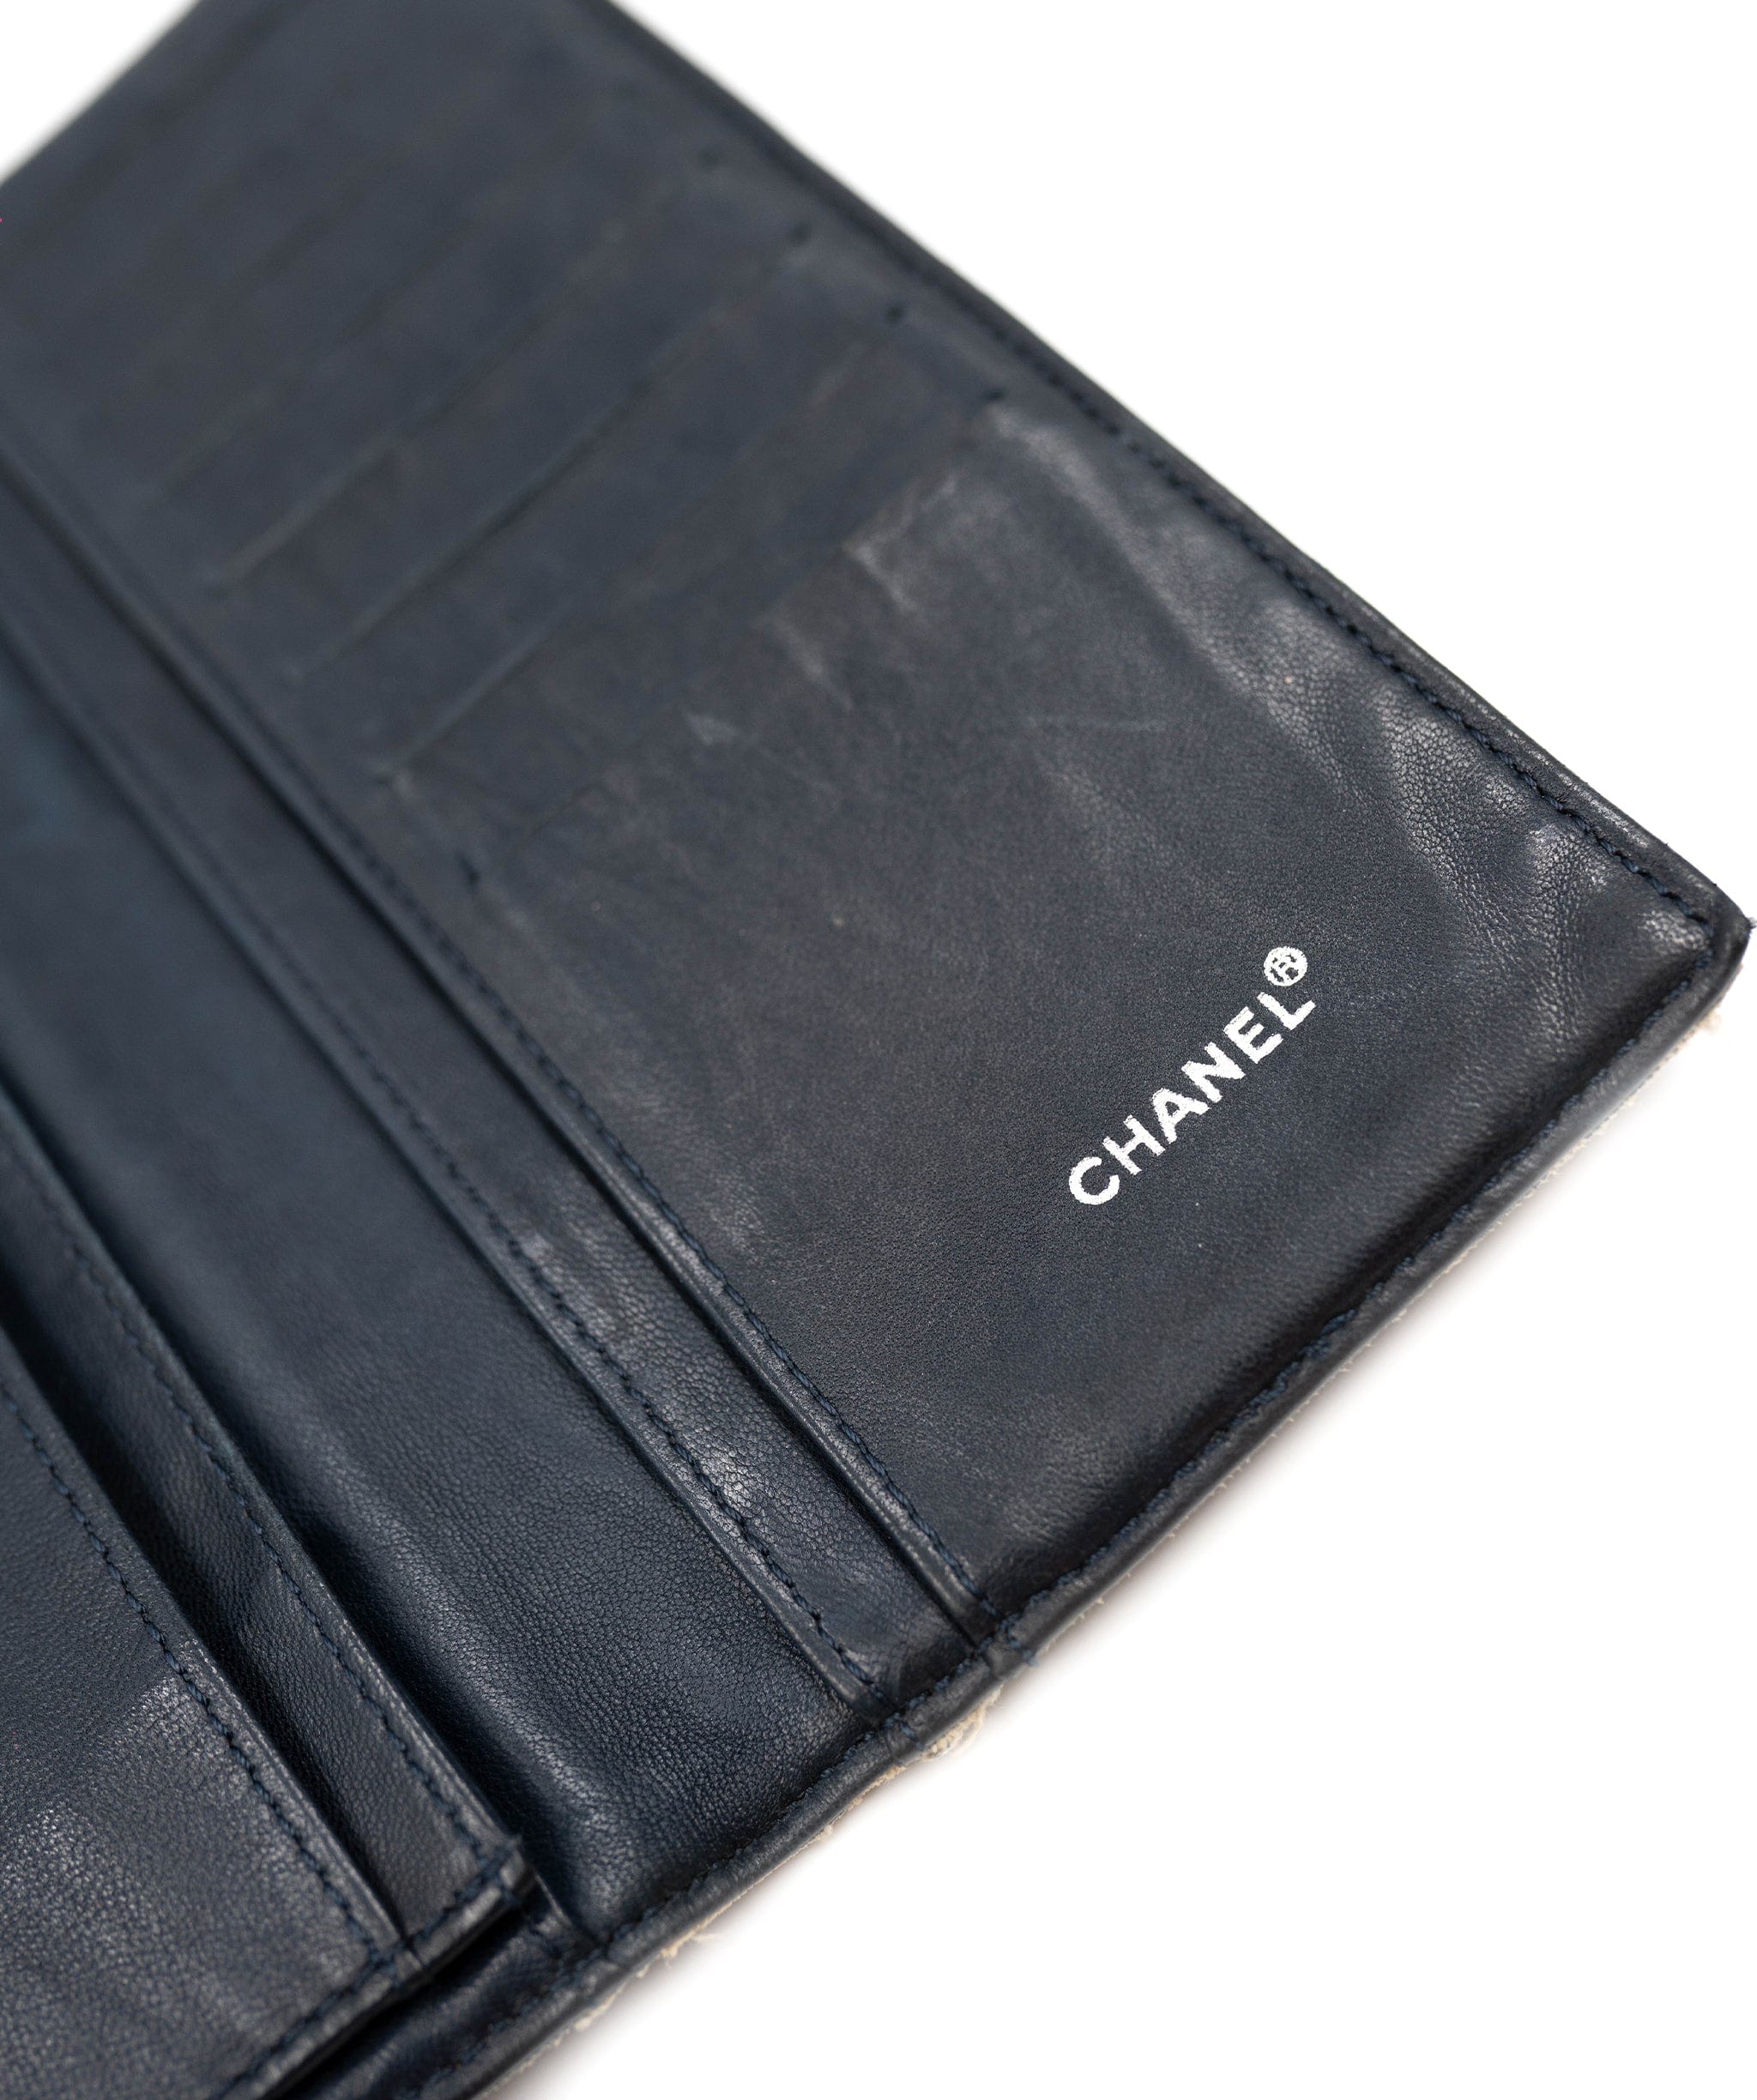 Chanel Chanel nO5 blue wallet AGC1328